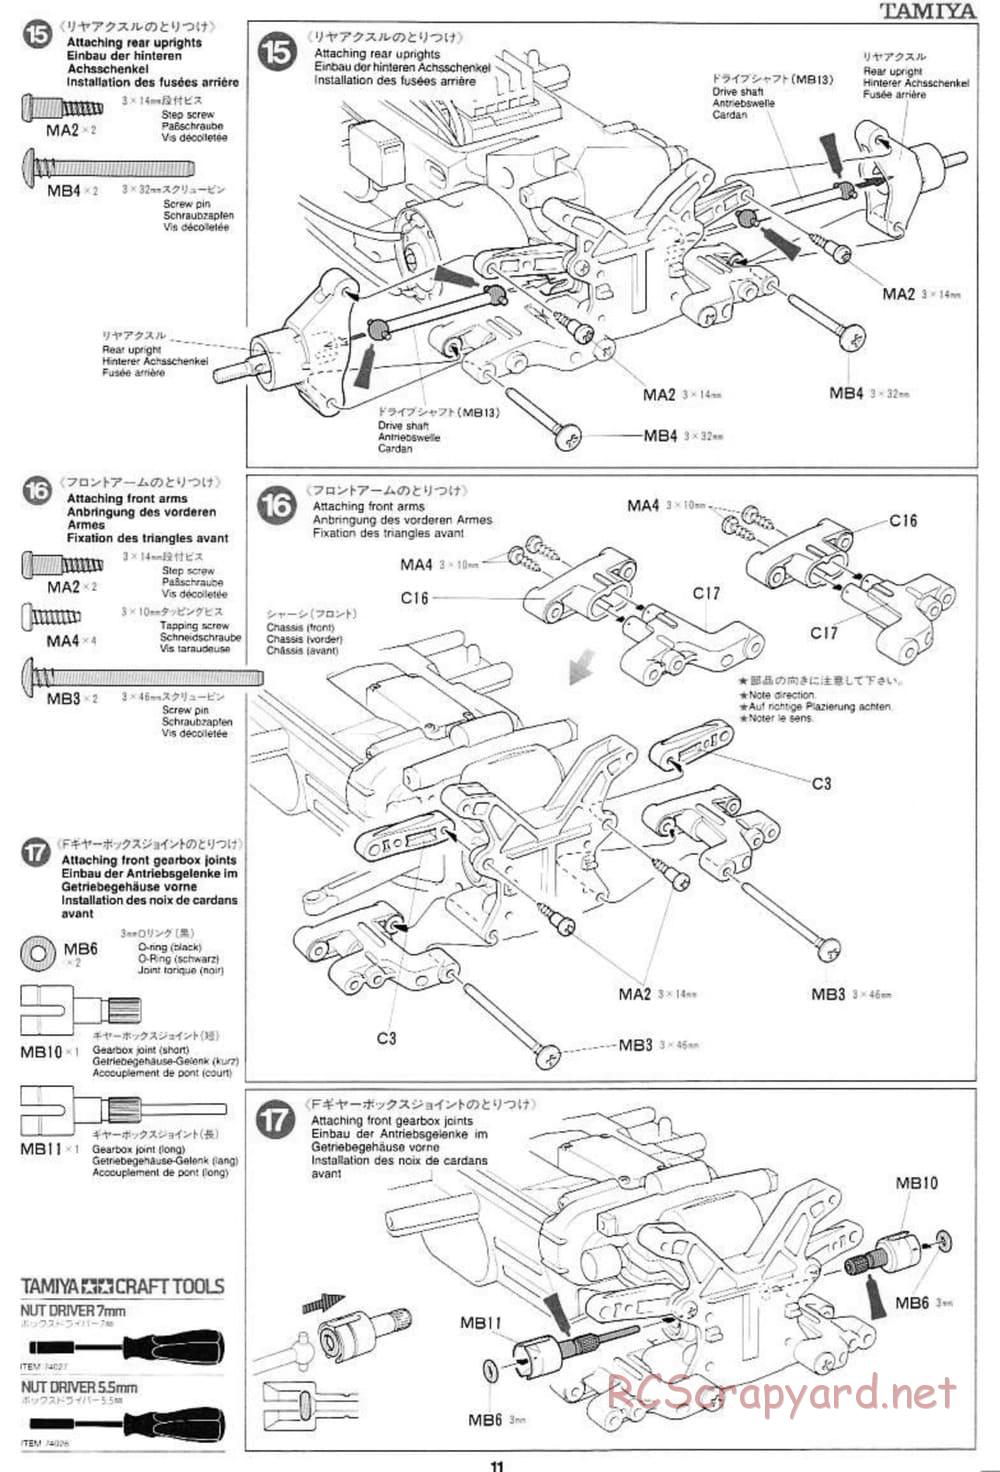 Tamiya - Ford Escort WRC - TL-01 Chassis - Manual - Page 11